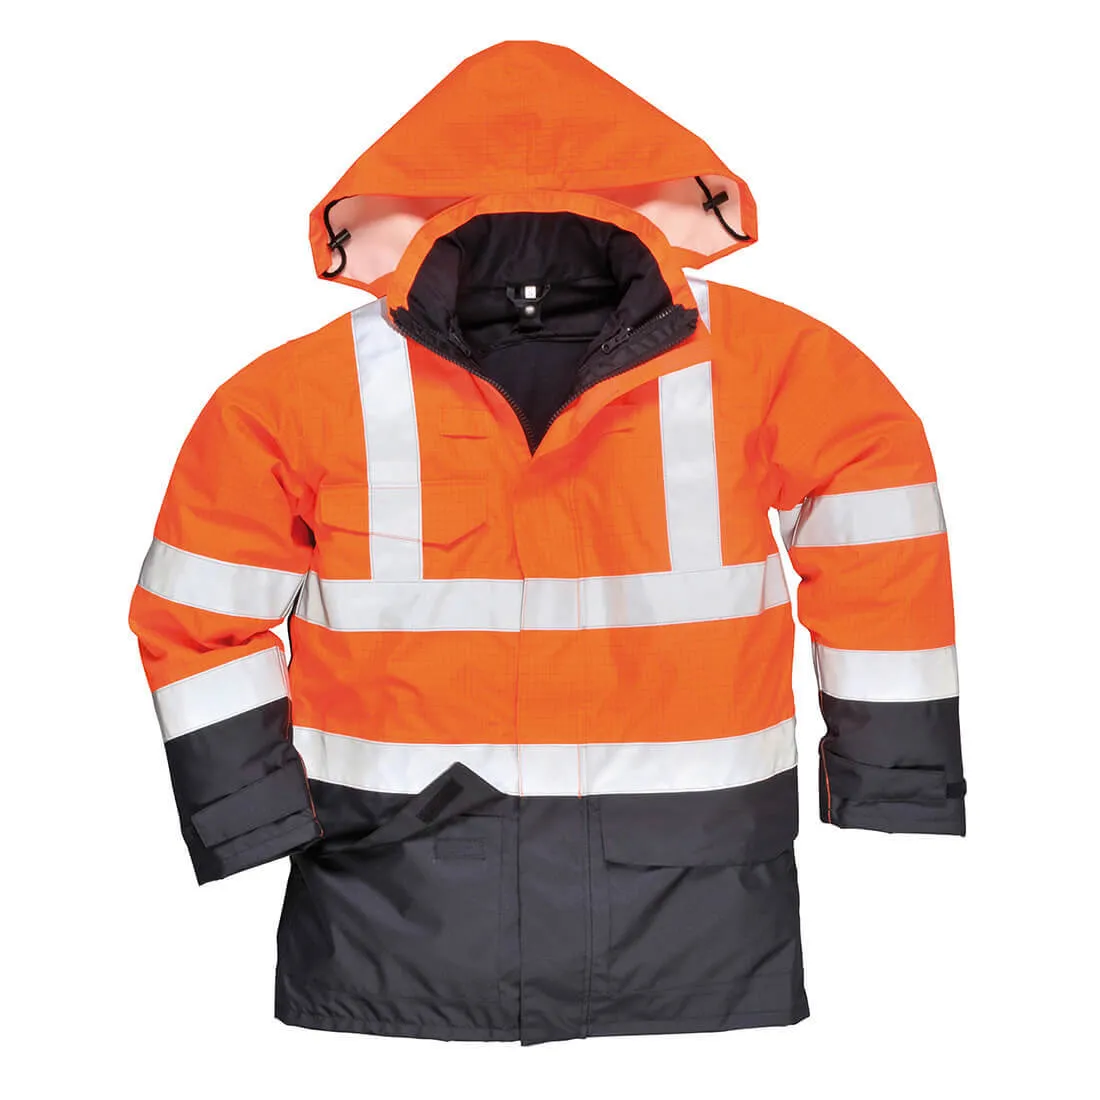 Biz Flame Hi Vis Flame Resistant Rain Multi Protection Jacket - Orange / Navy, 3XL